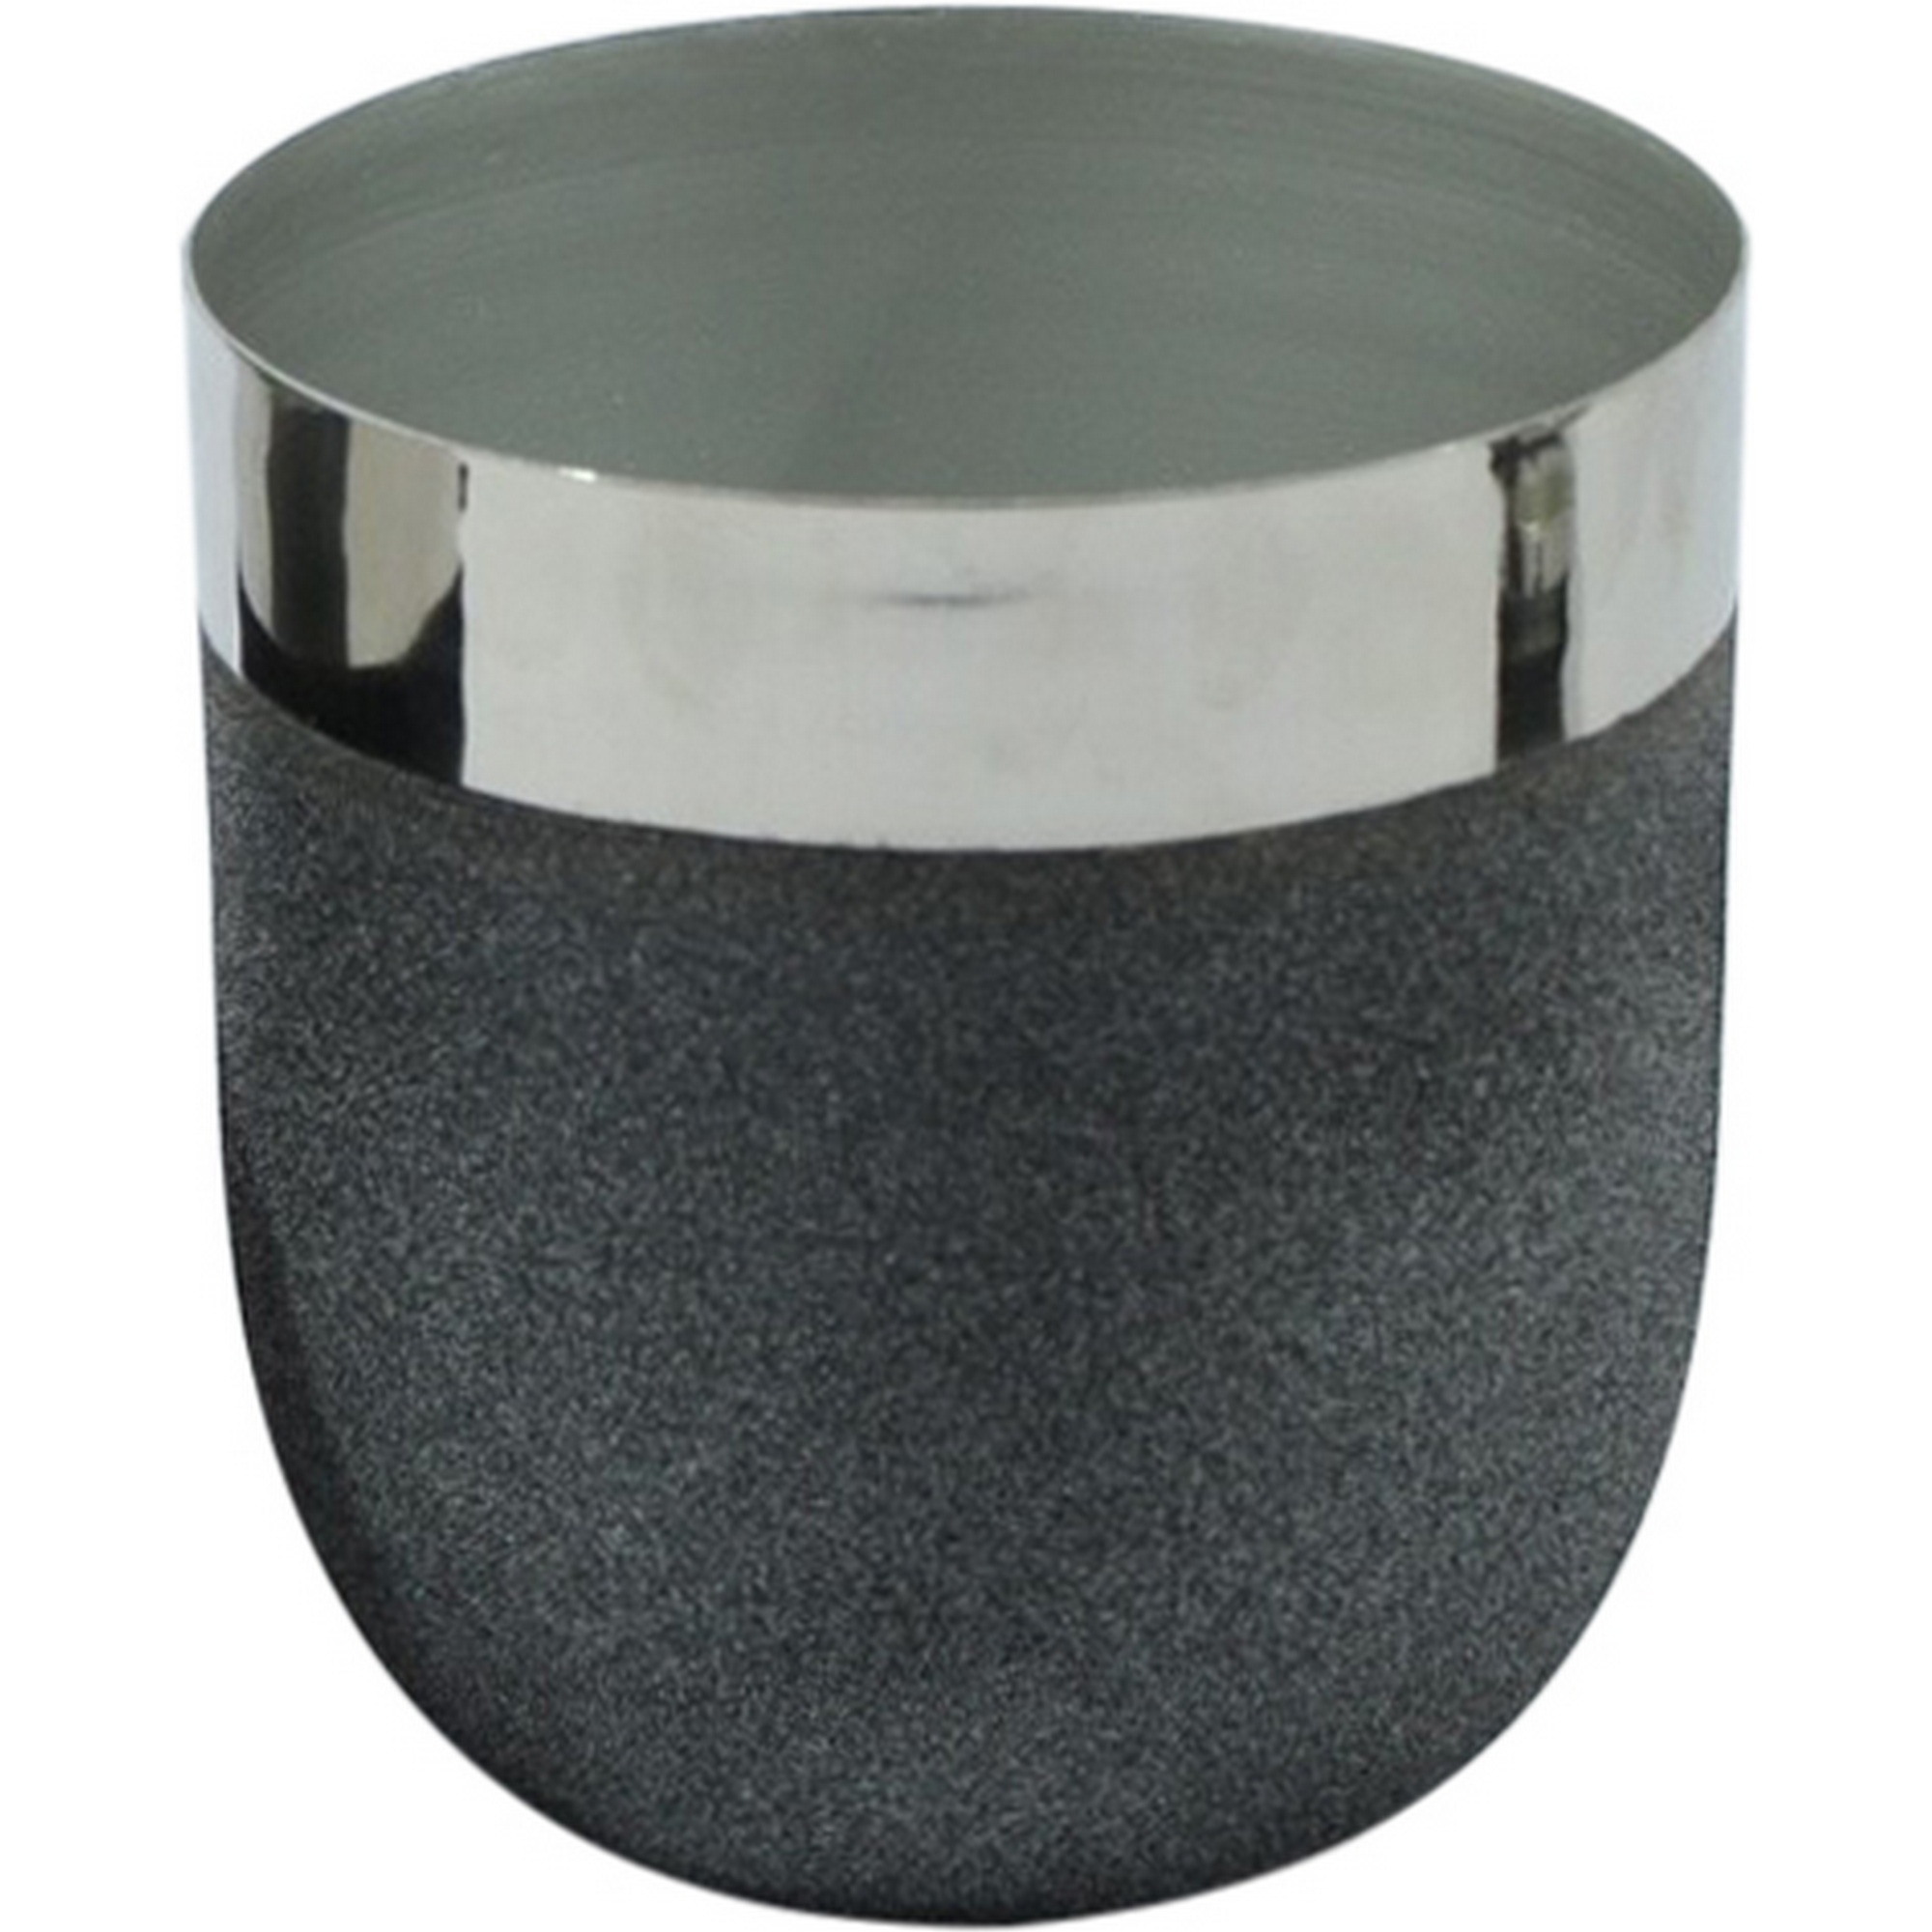 Metallübertopf lackiert grau mit Silberrand 10 x 10 cm + product picture